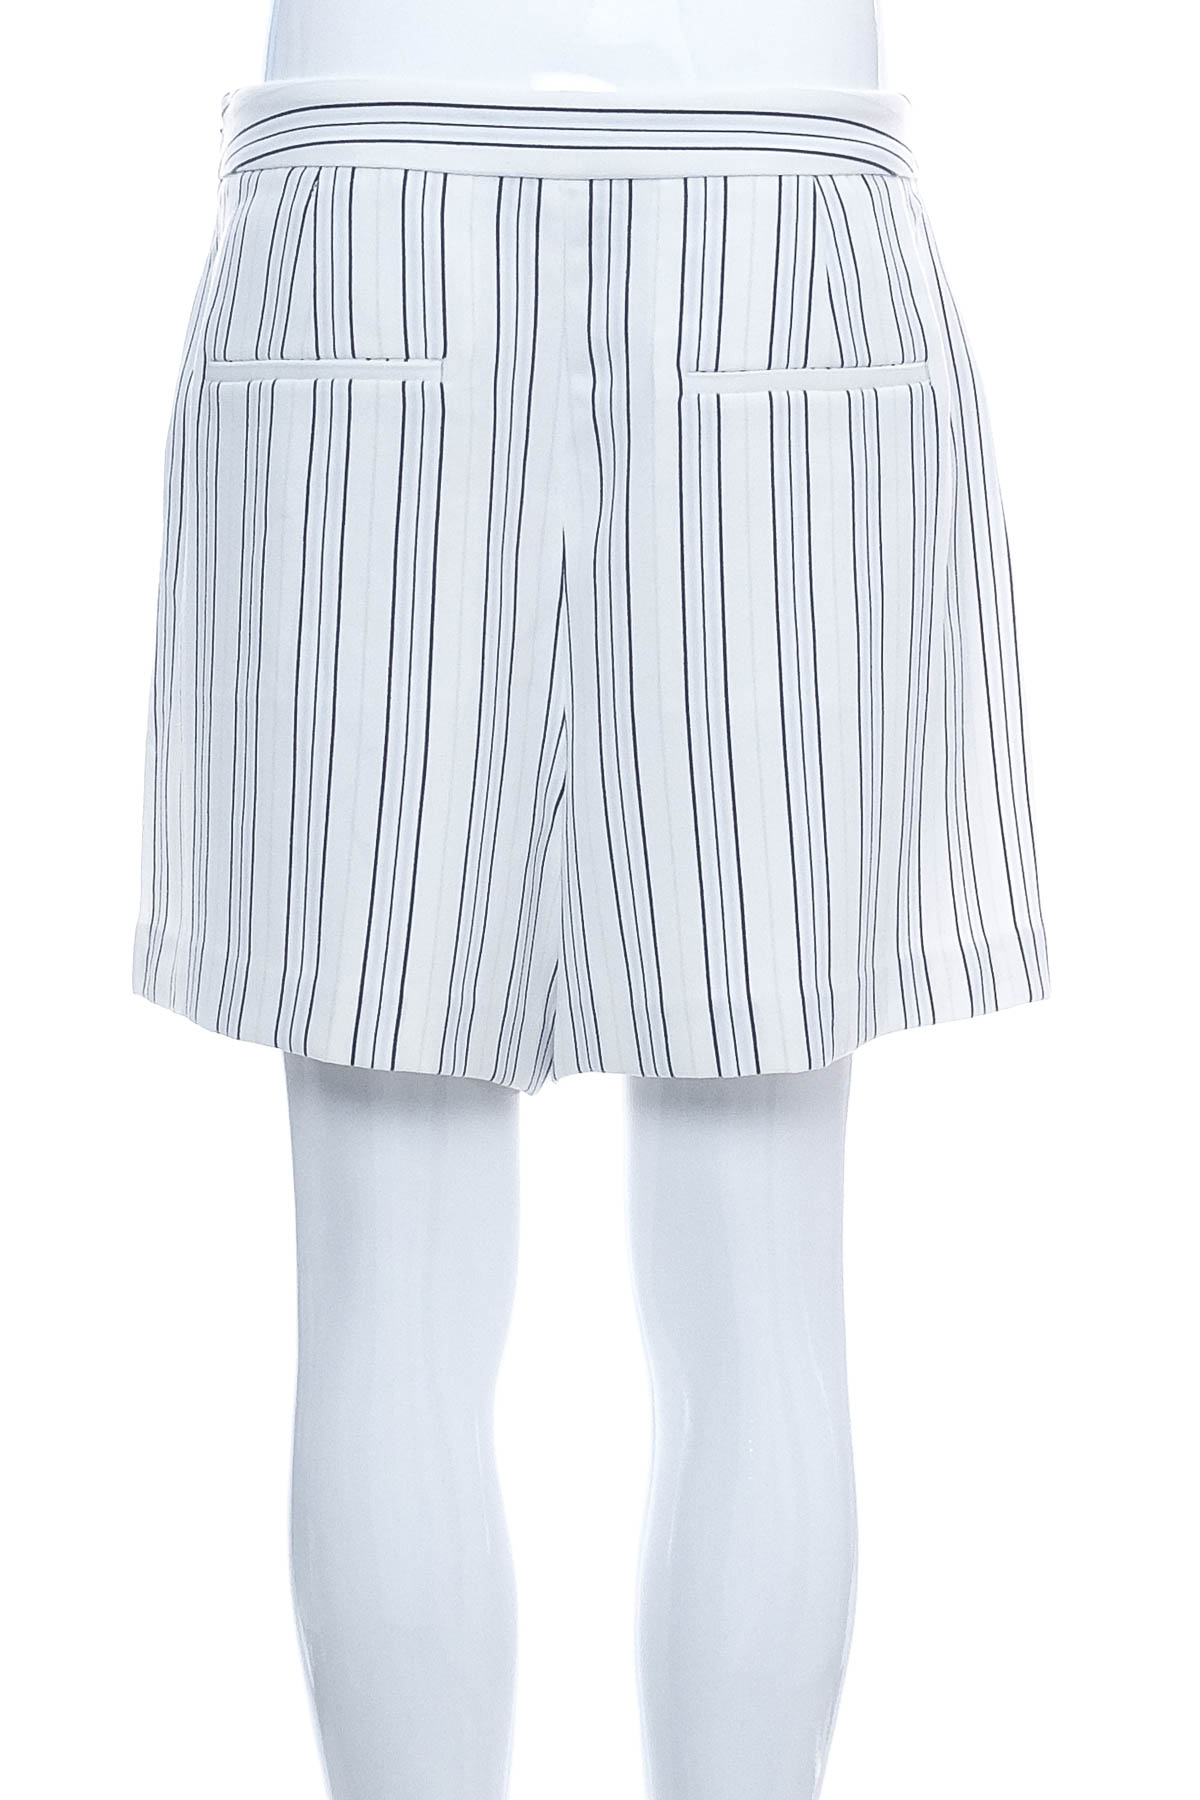 Female shorts - Ann Taylor - 1